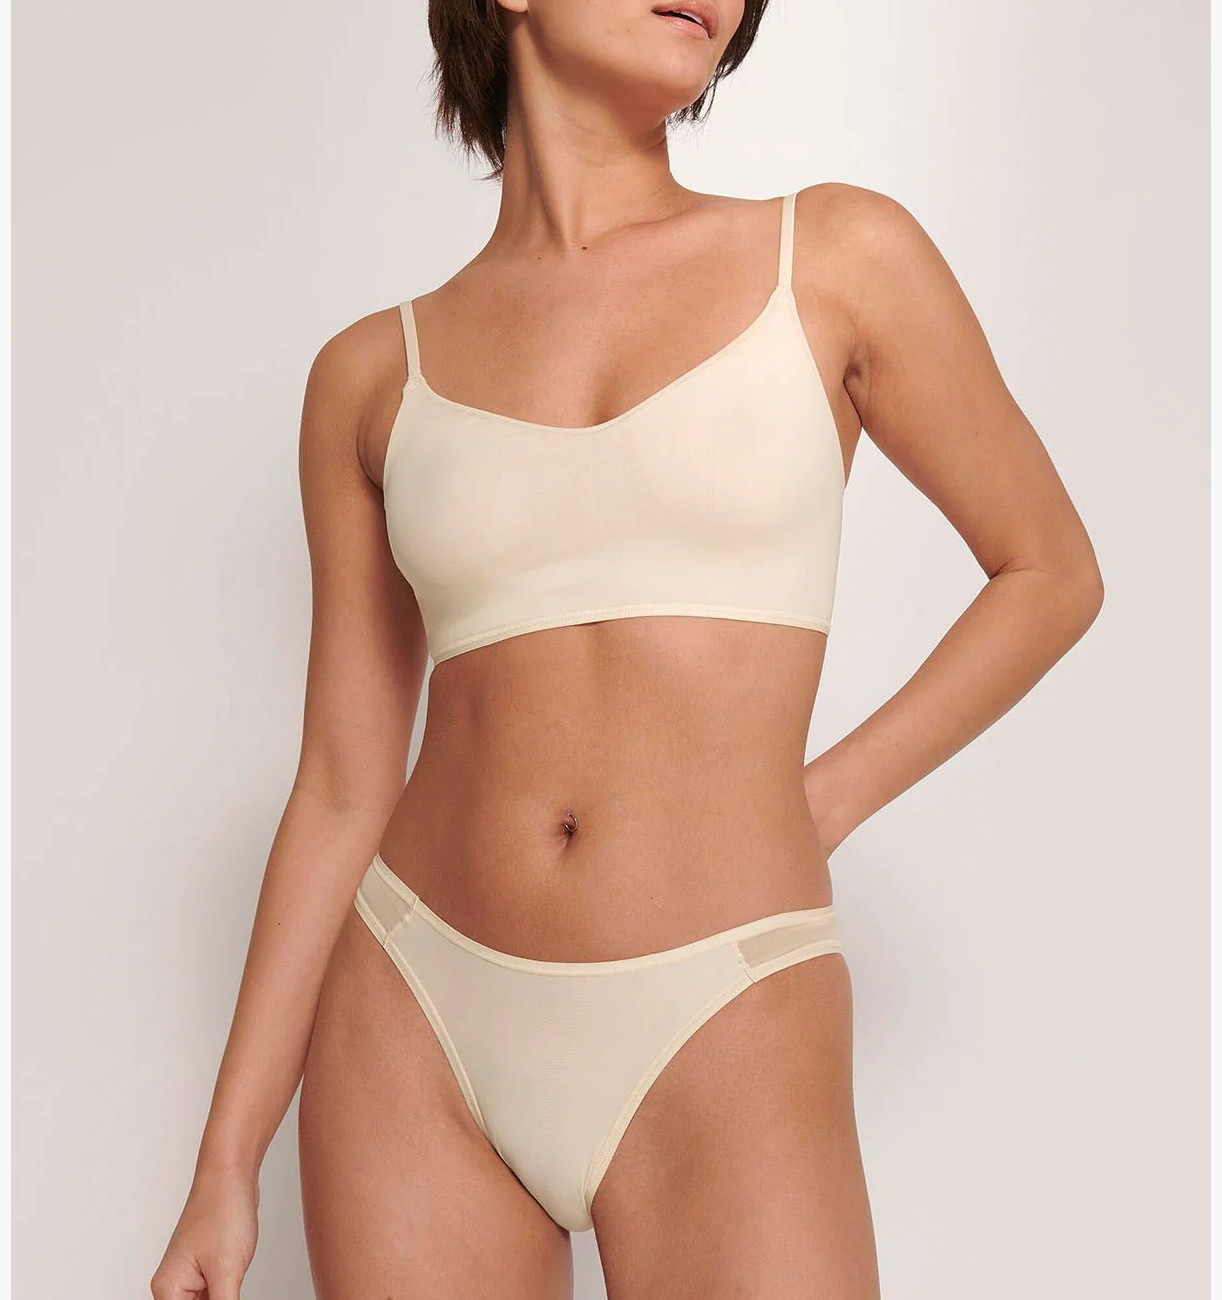 Kayser Women's Brazilian Push Up Bra - White - Size 14D